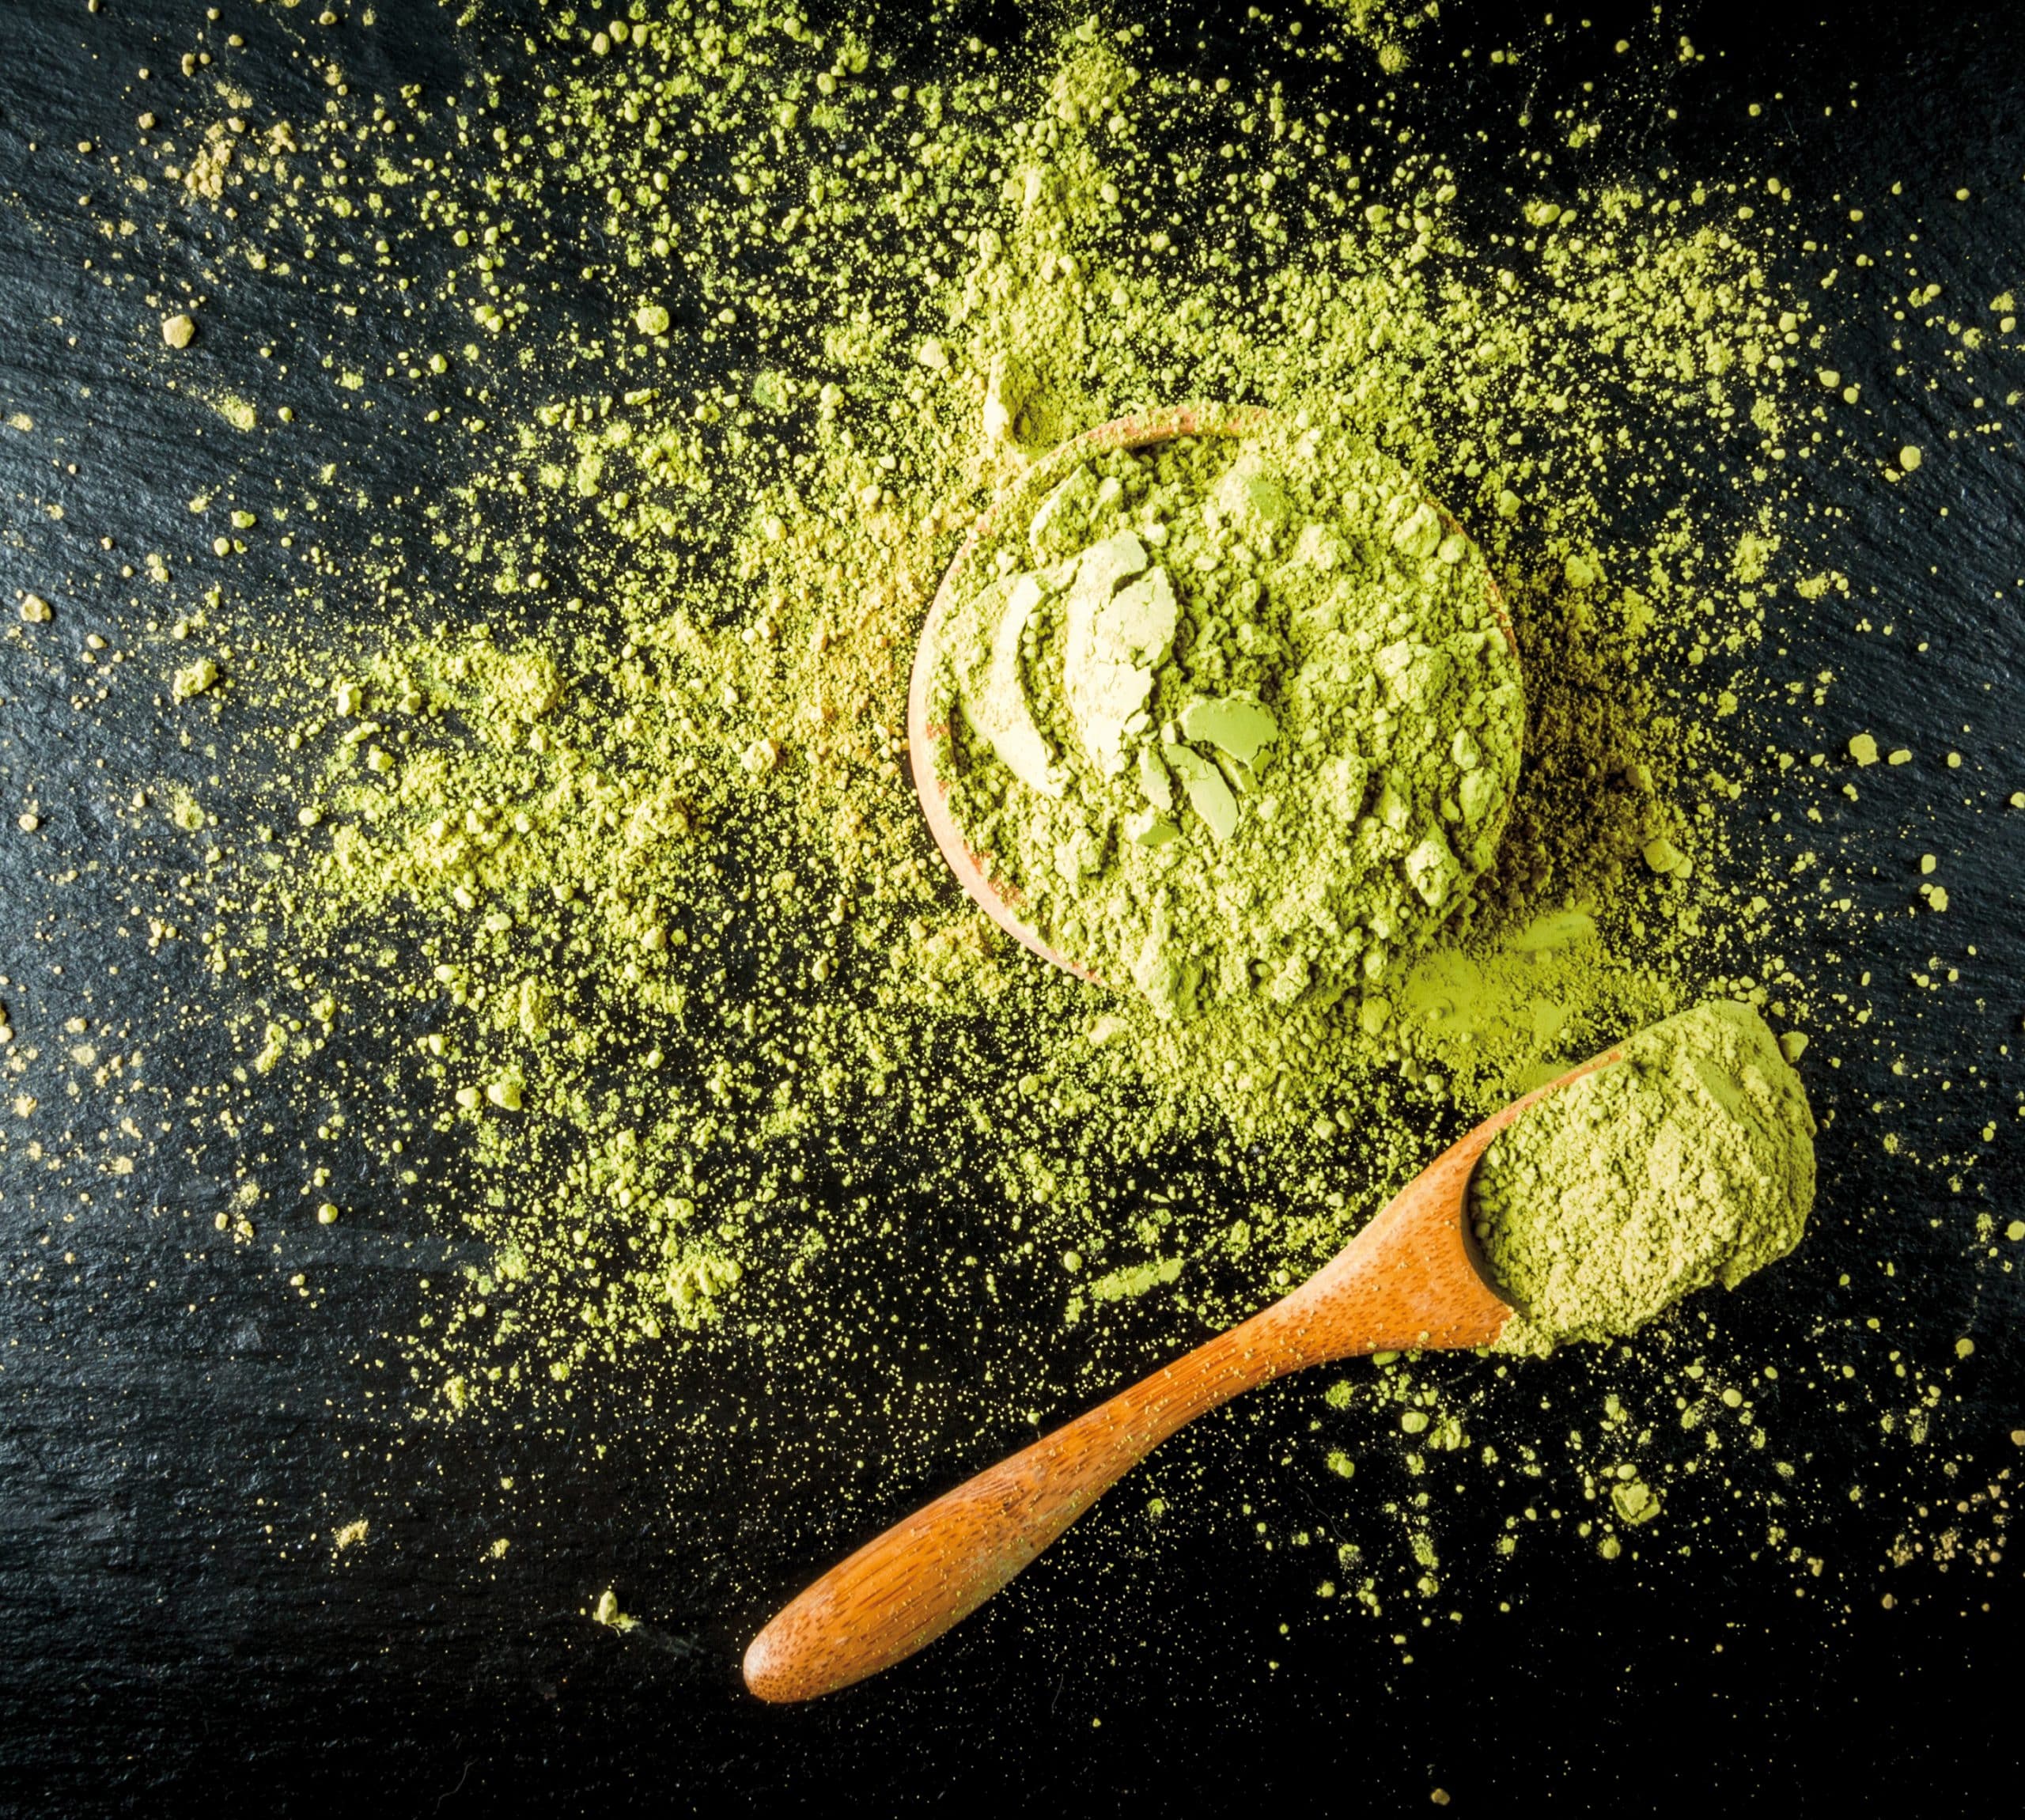 âStrikingâ? research finds matcha green tea can kill breast cancer cells